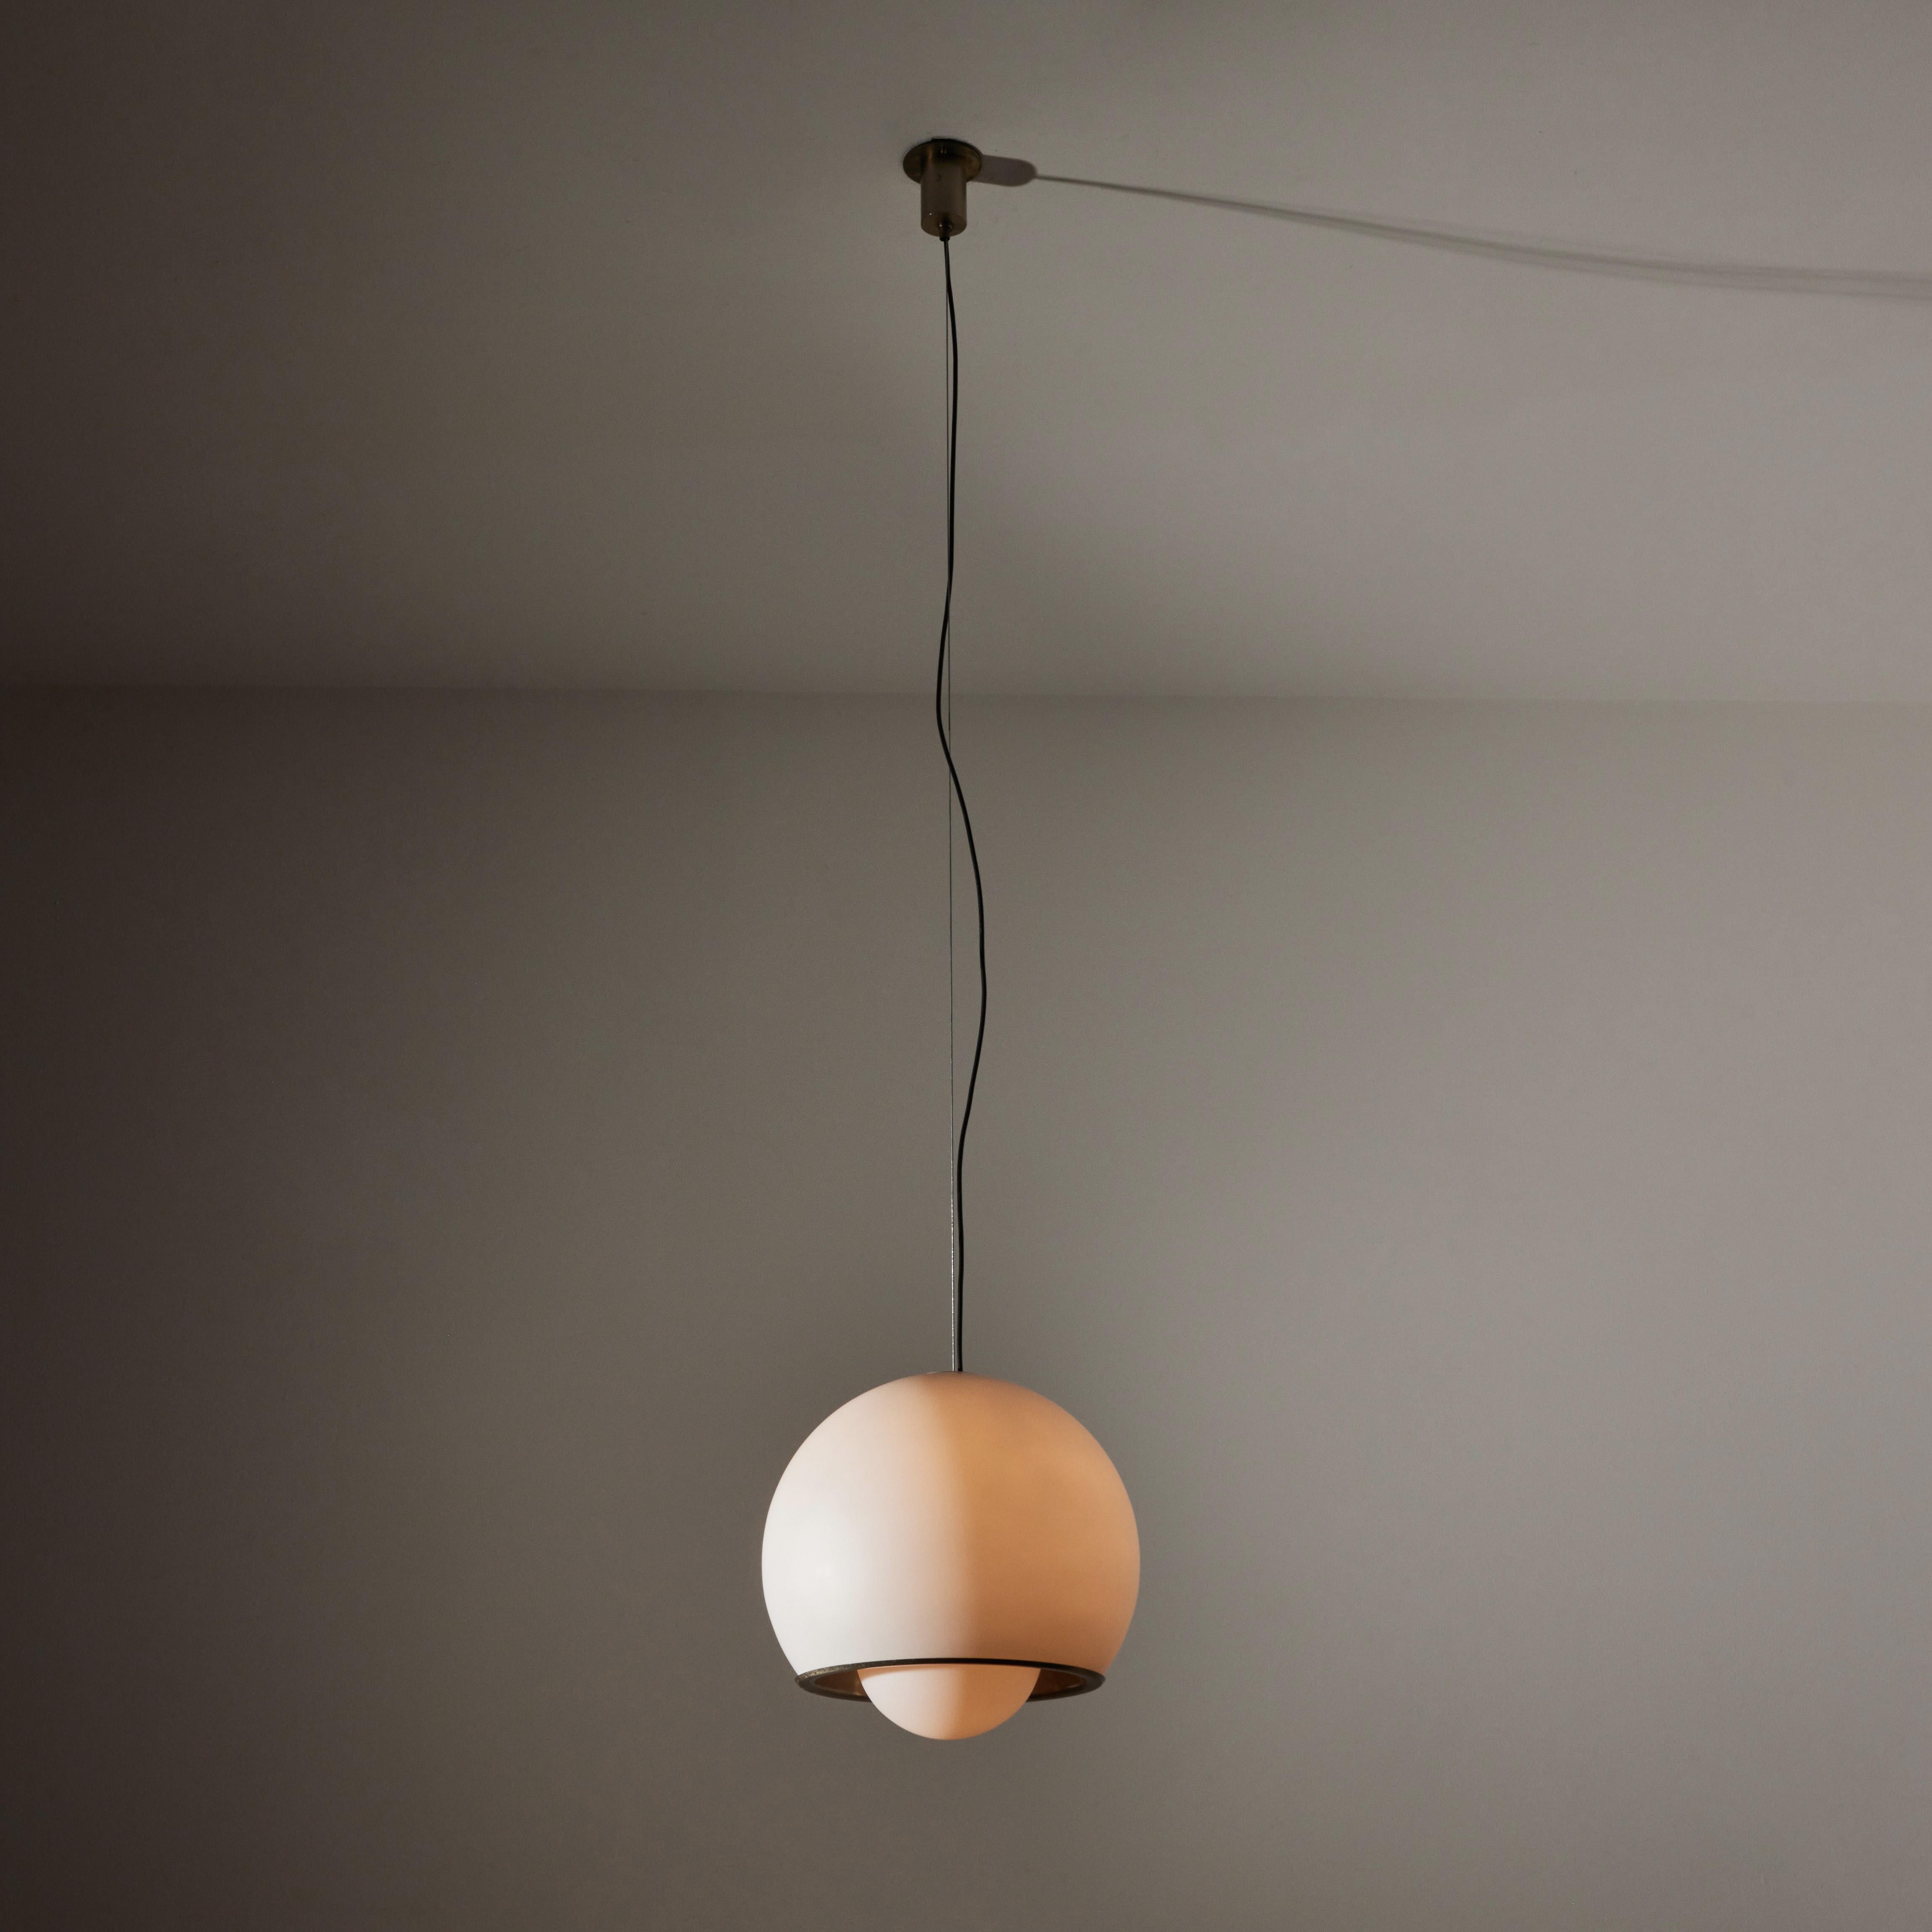 Italian Suspension Light by Fontana Arte